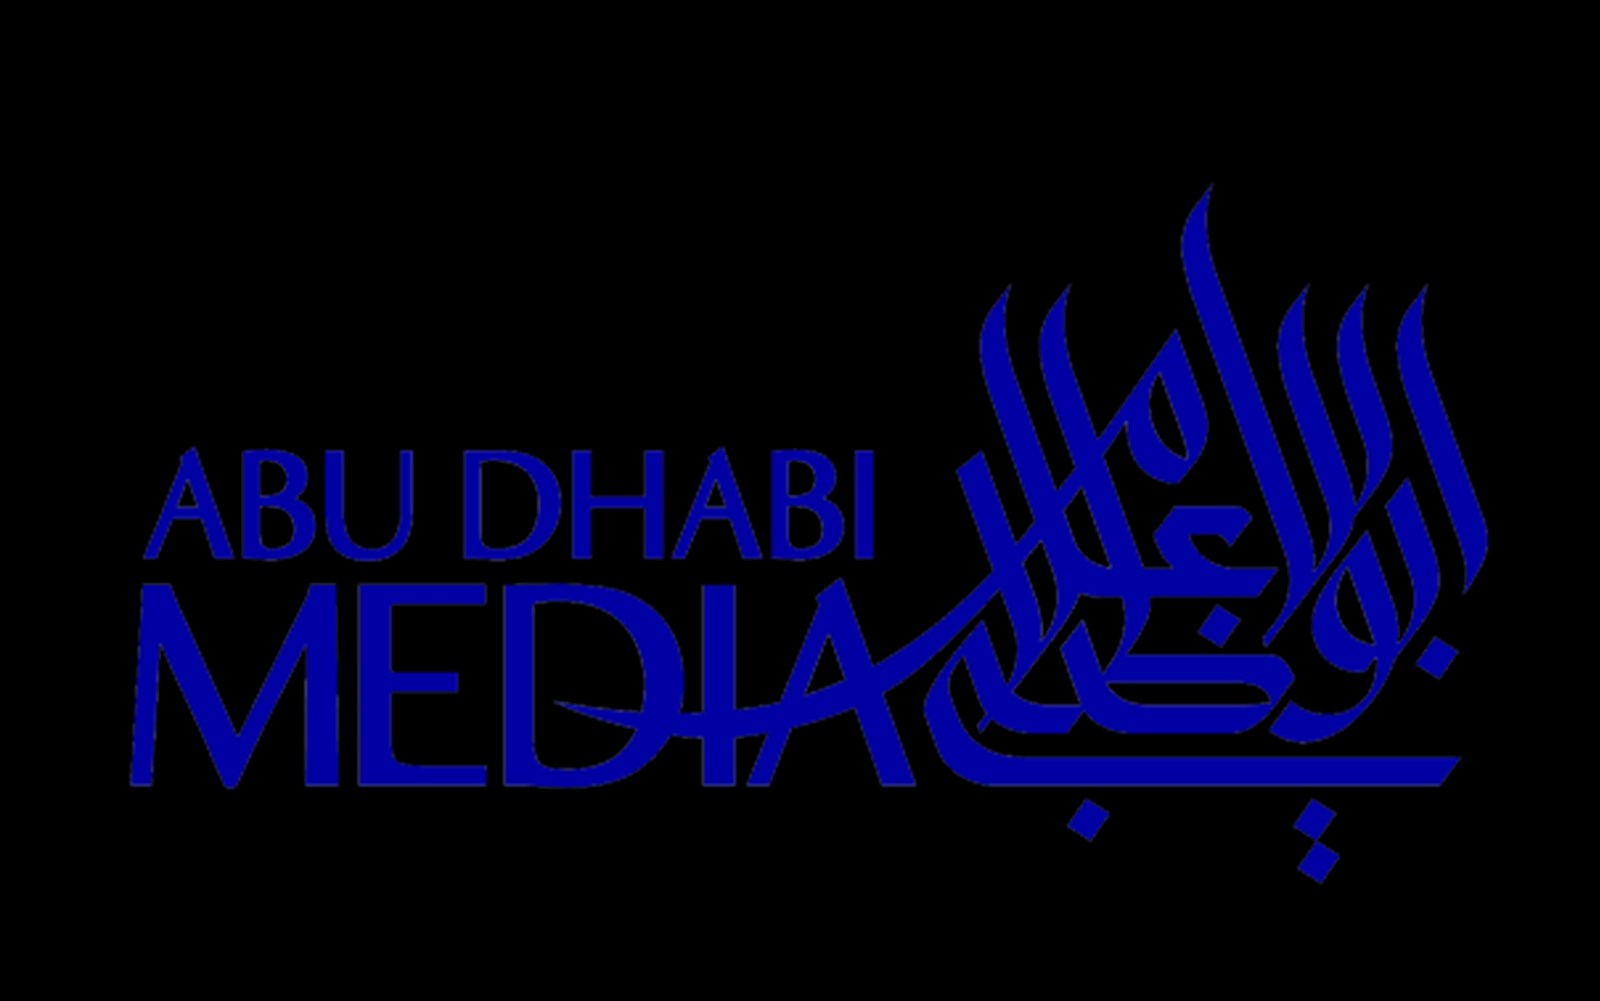 Abu Dhabi Media City